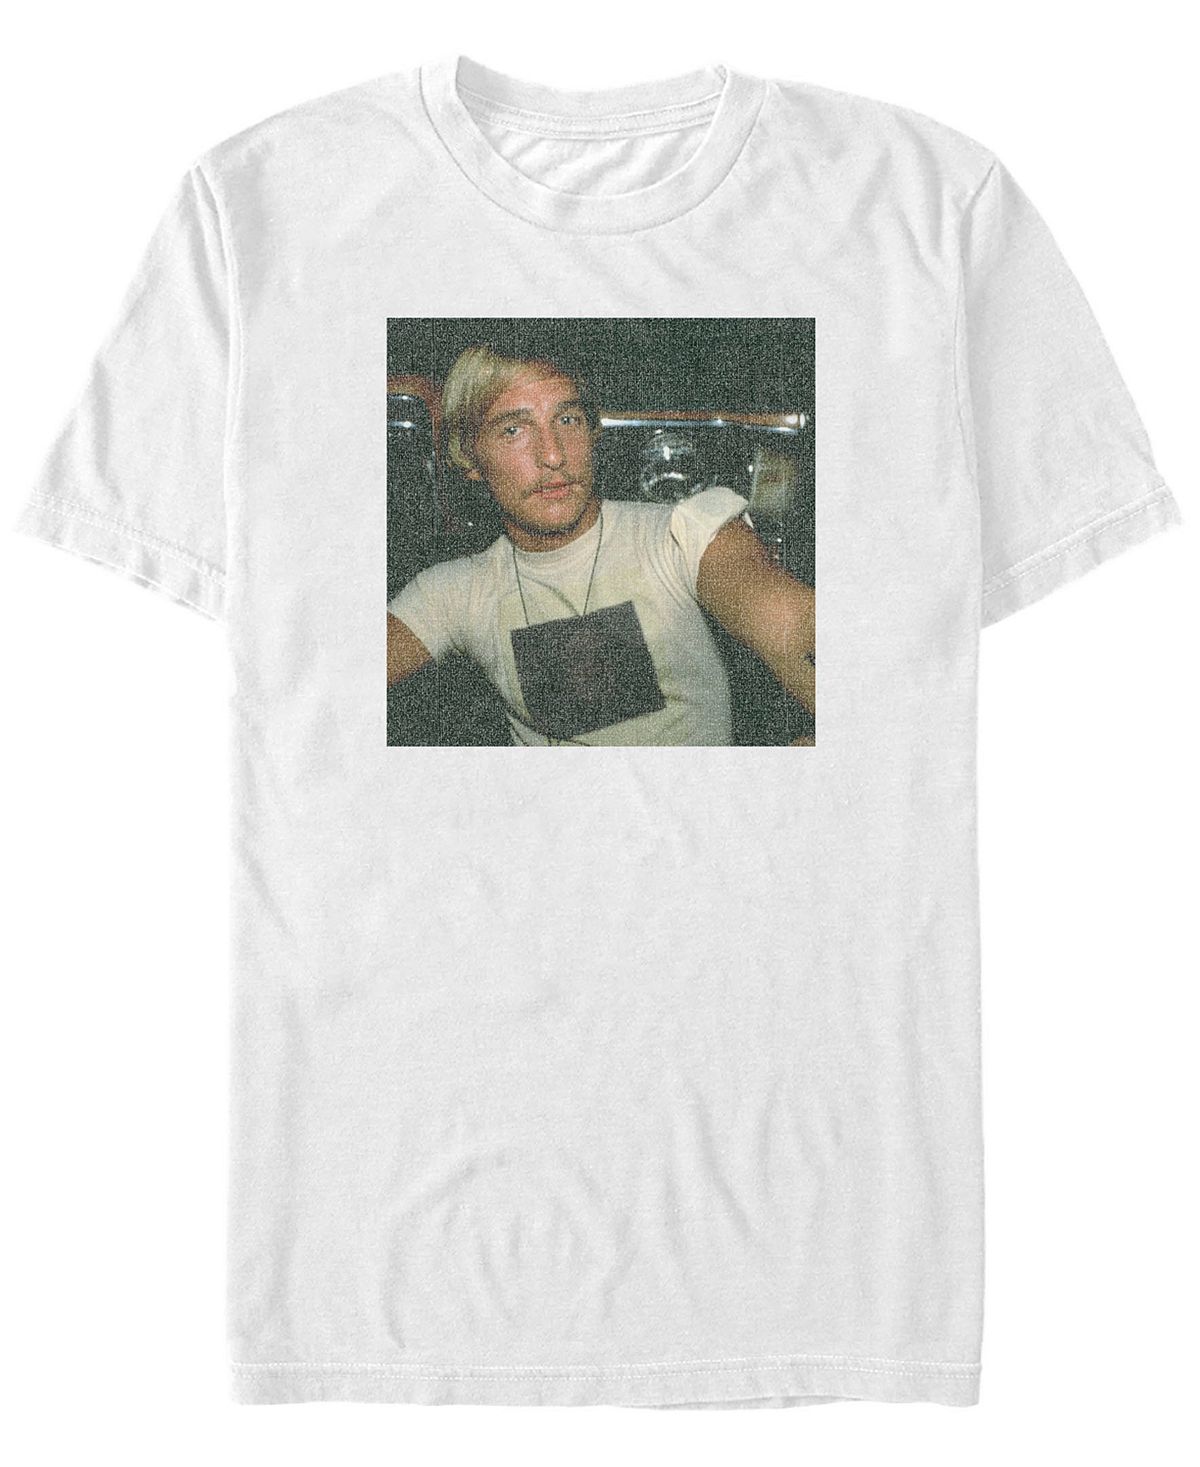 Мужская футболка с коротким рукавом в стиле ретро с изображением дэвида вудерсона Fifth Sun, белый ost – dazed and confused coloured vinyl 2 lp